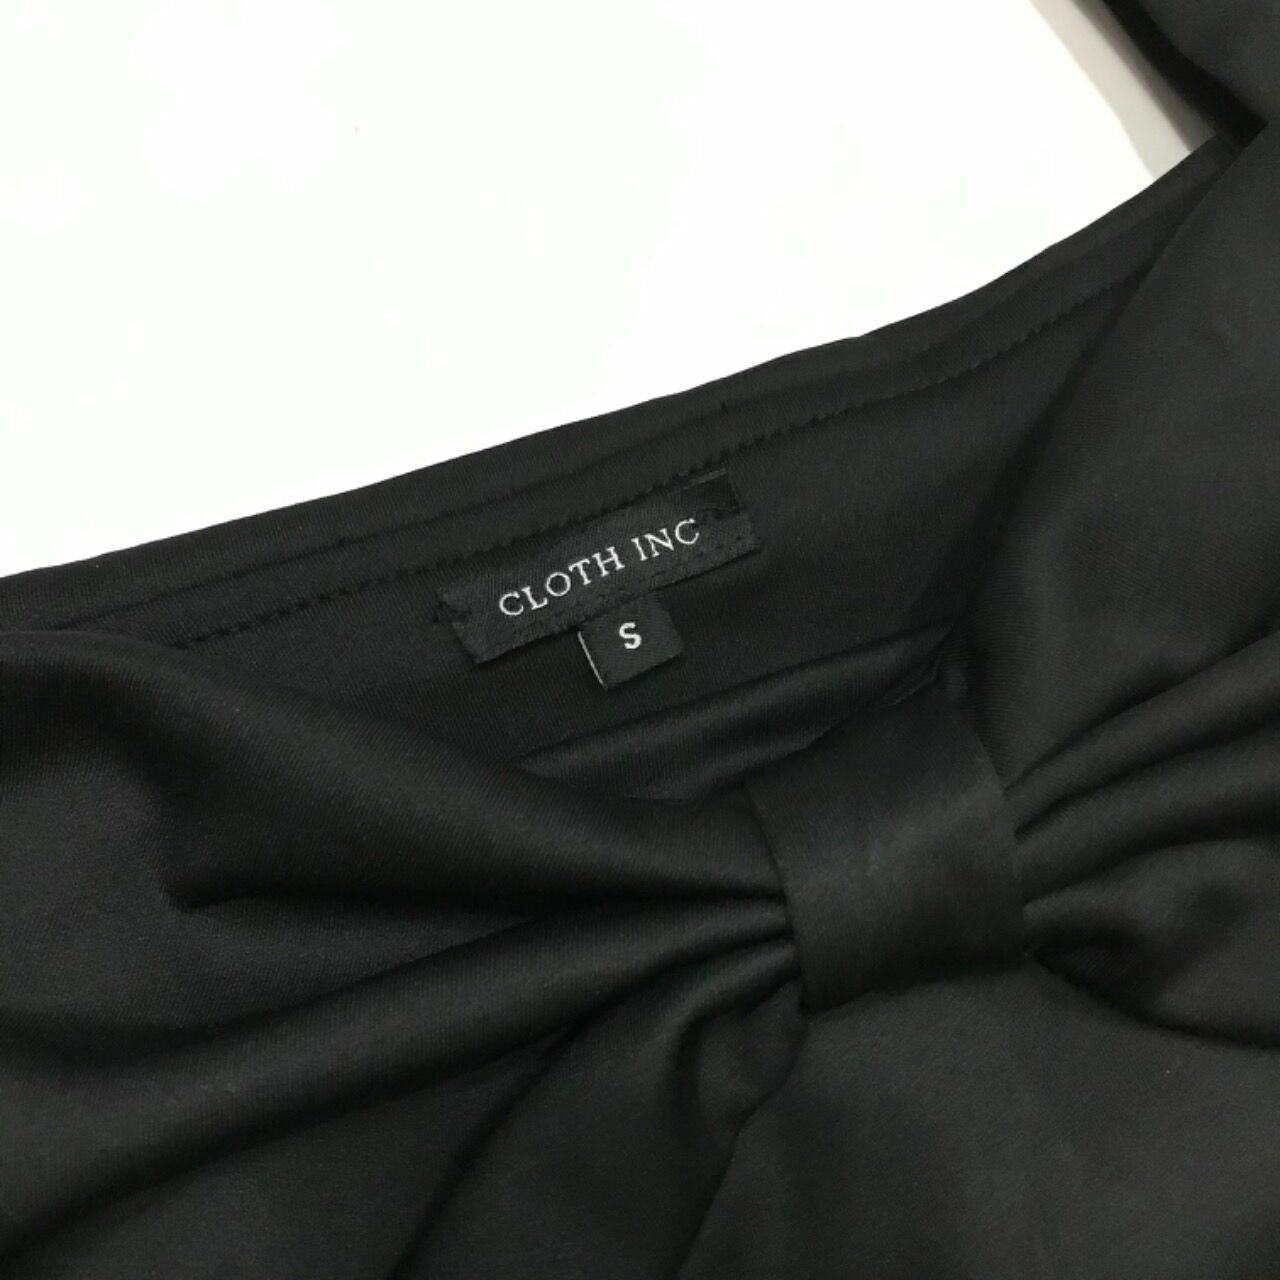 Cloth Inc Black Ribbon Top Blouse